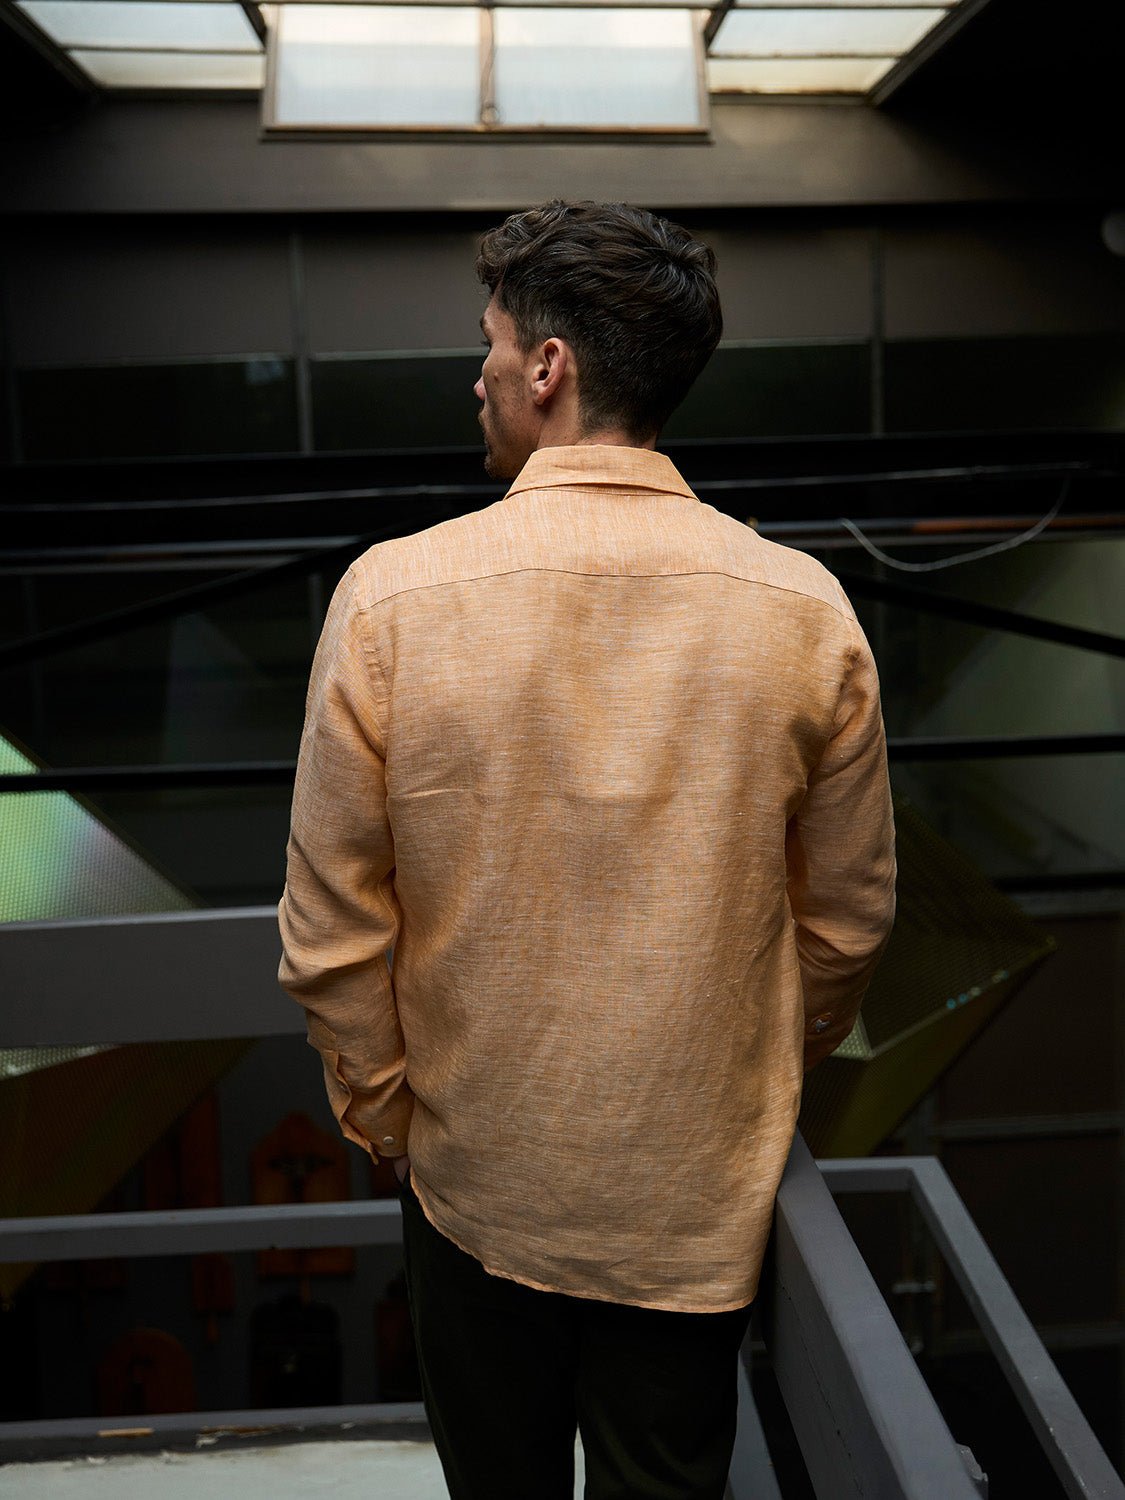 Tailor-made Linen Shirt Verzasca Orange